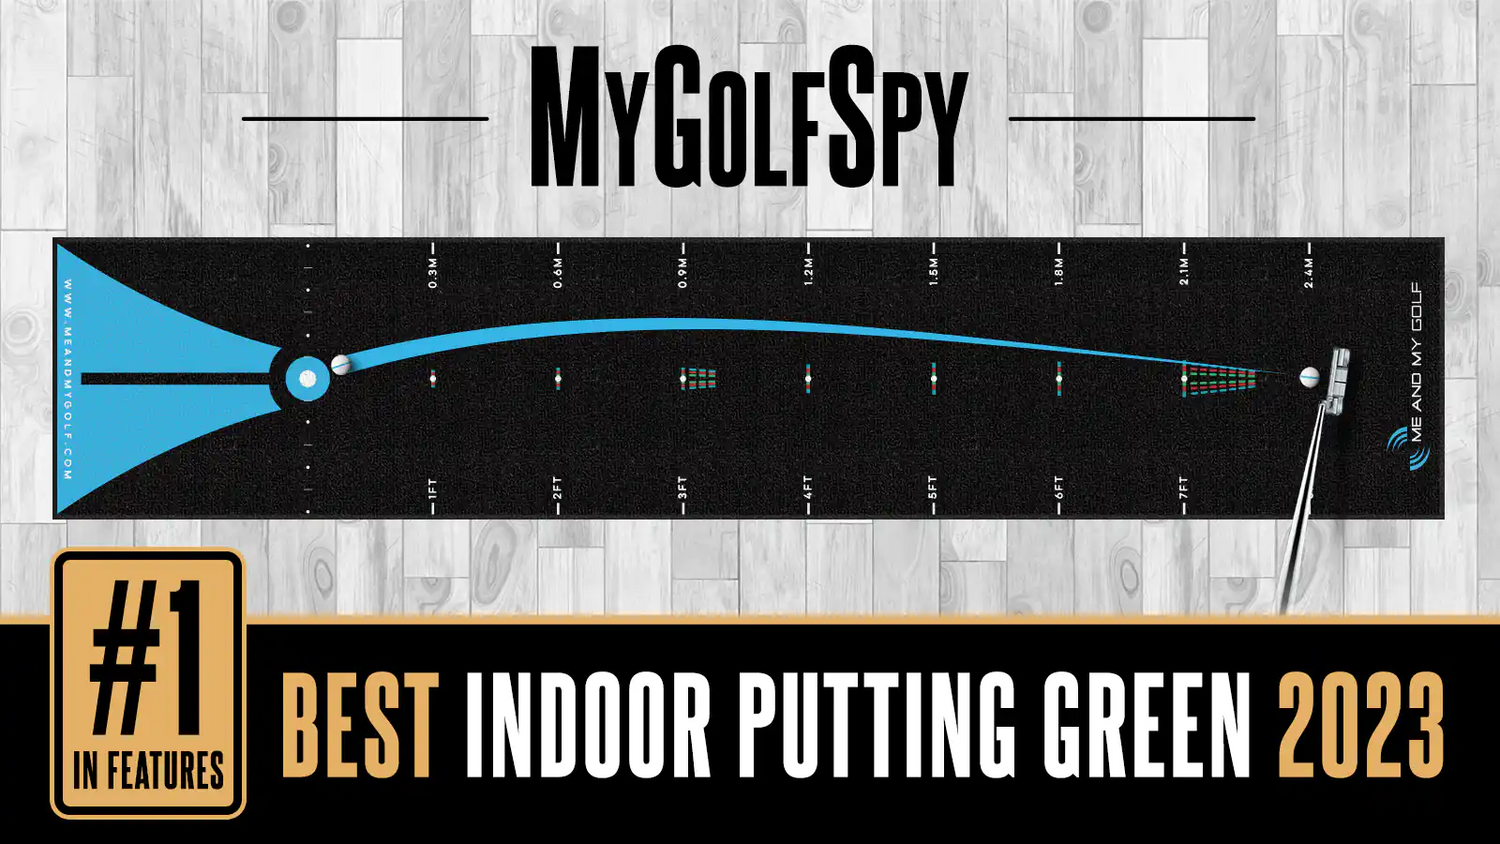 MyGolfSpy #1 In Features - Best indoor putting green 2023 